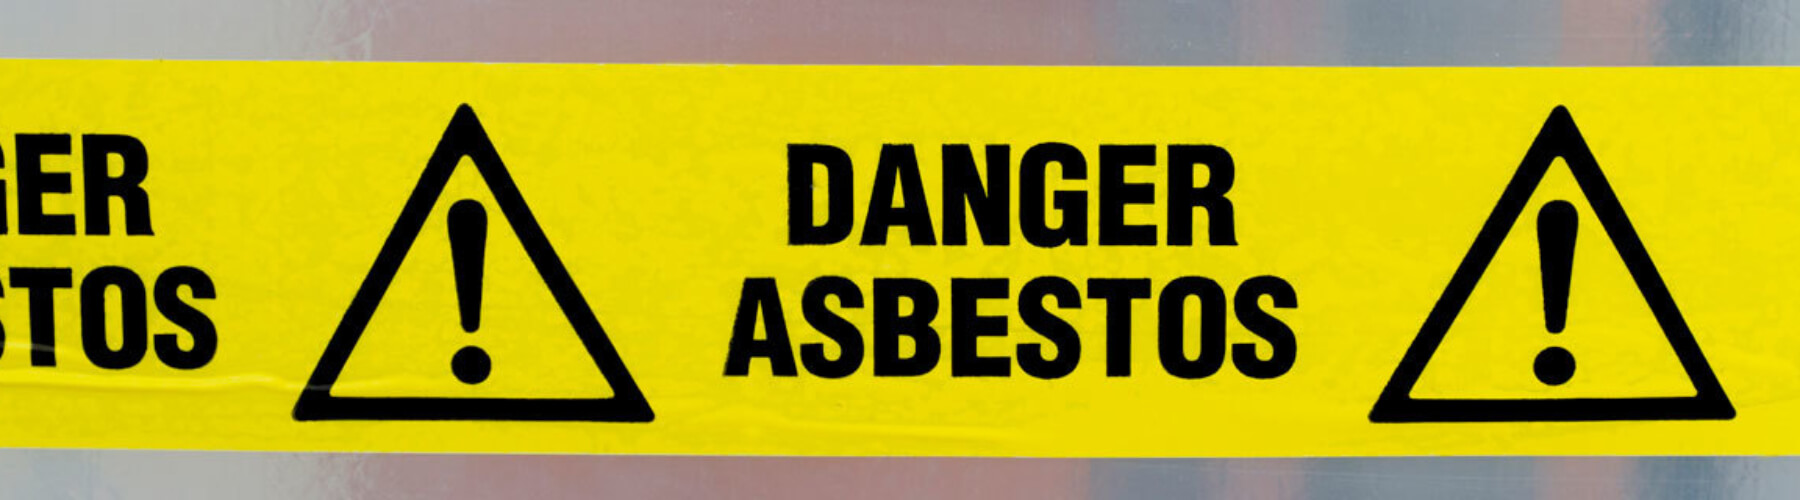 Danger, asbestos